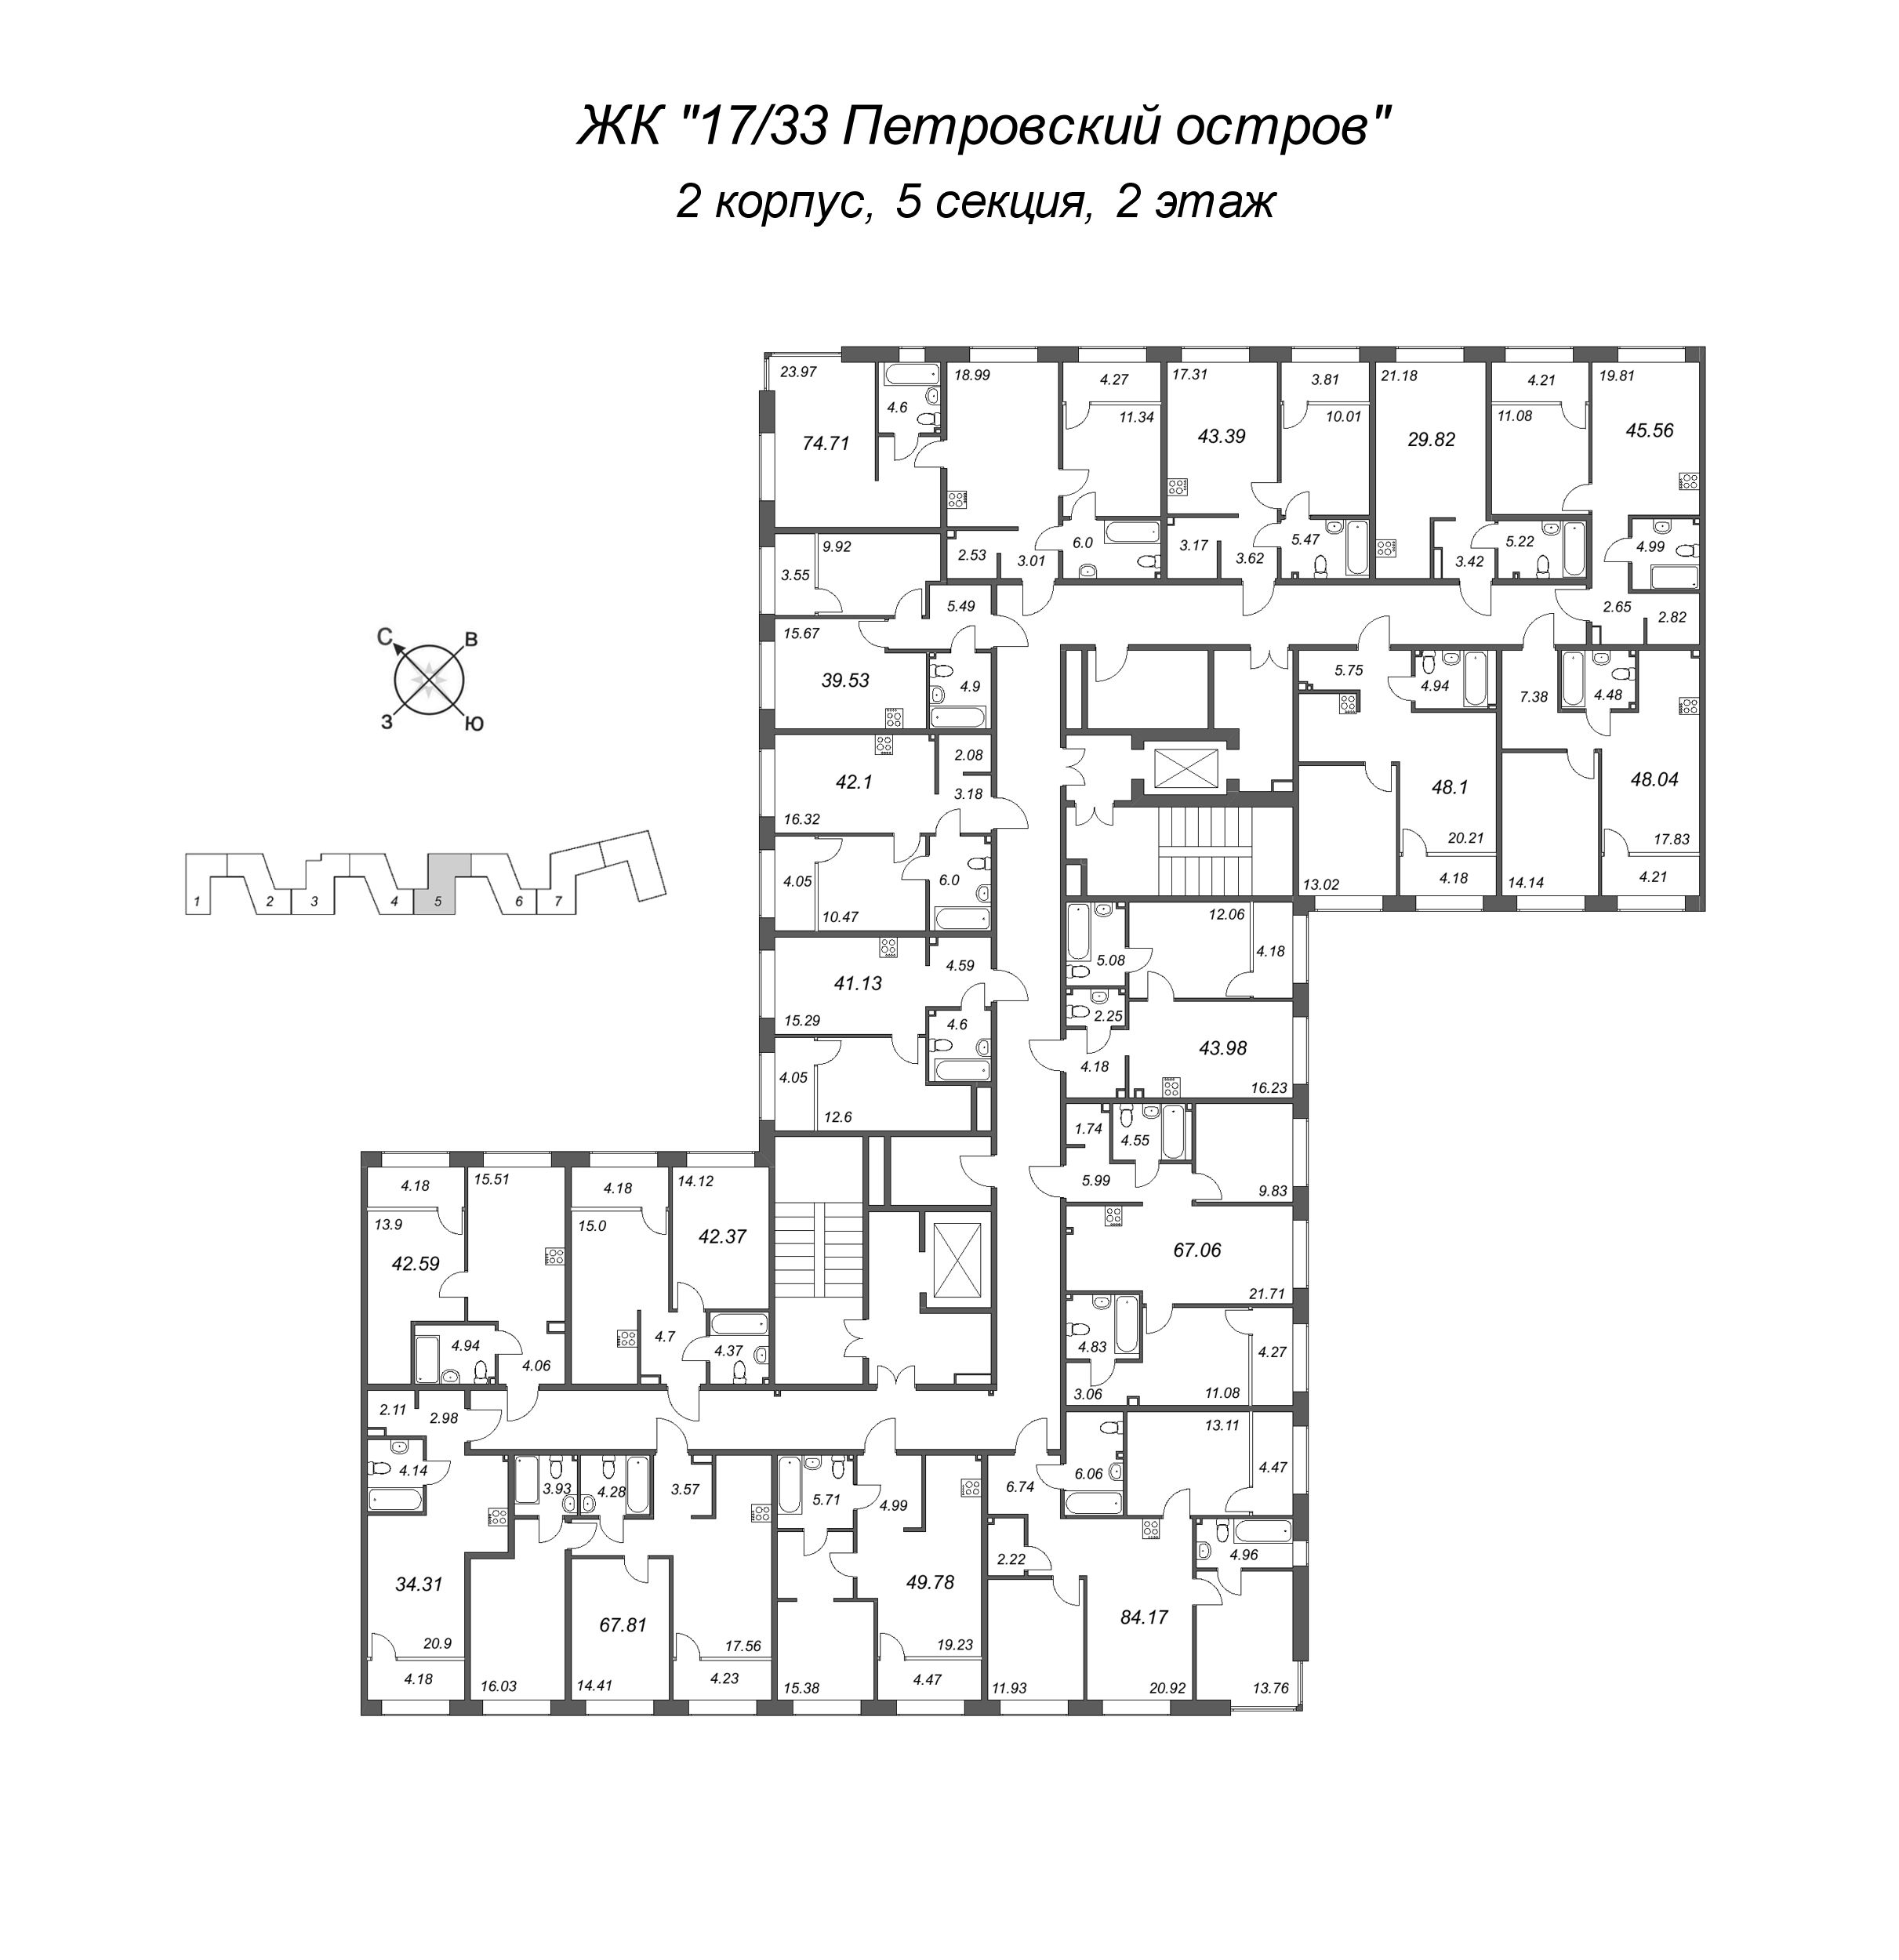 2-комнатная (Евро) квартира, 39.53 м² - планировка этажа